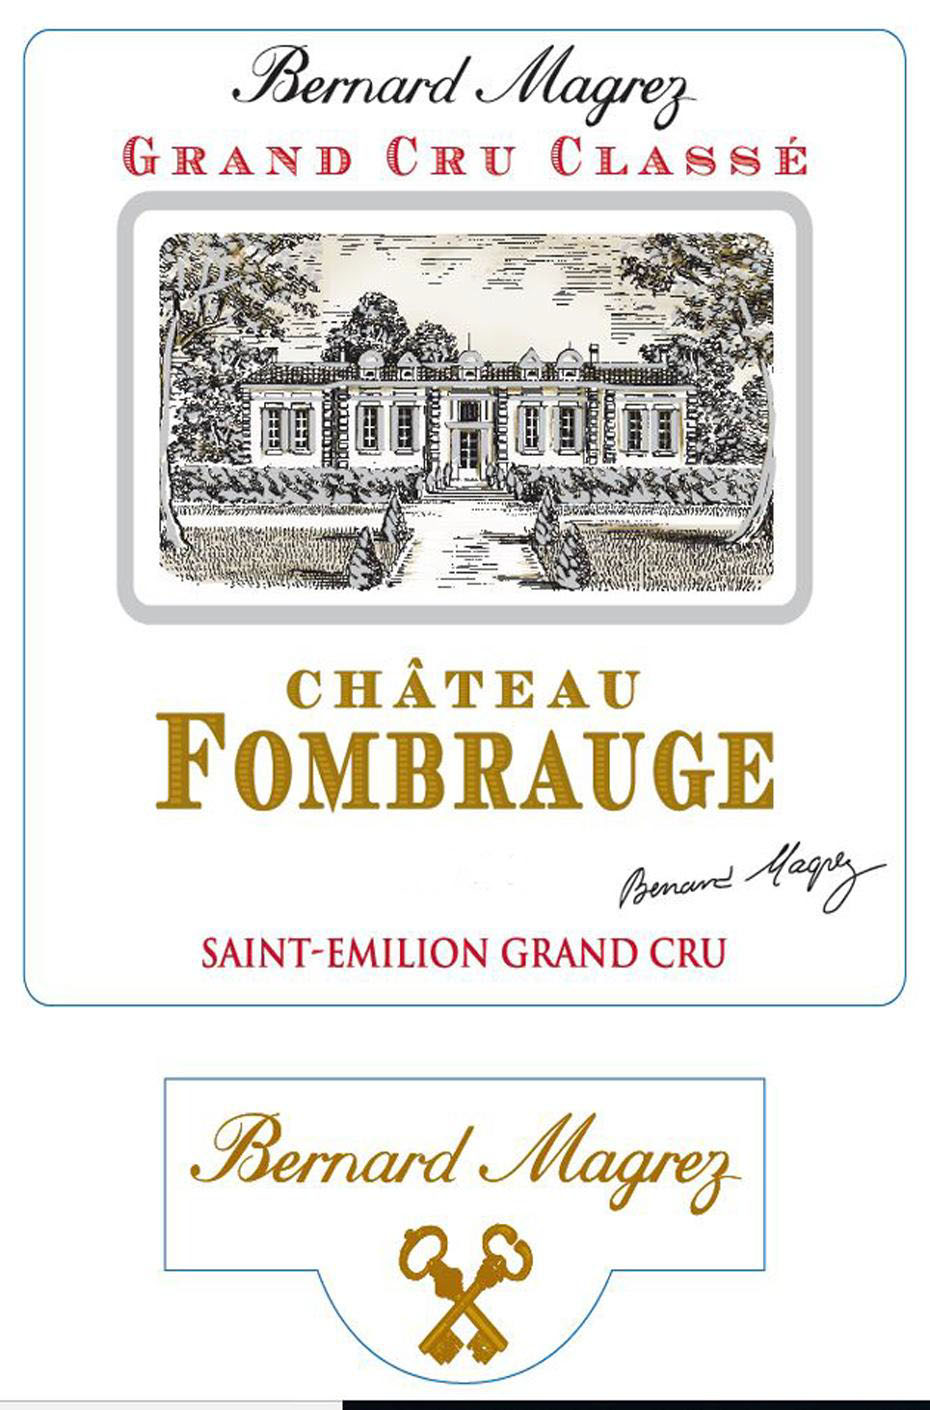 Chateau Fombrauge label